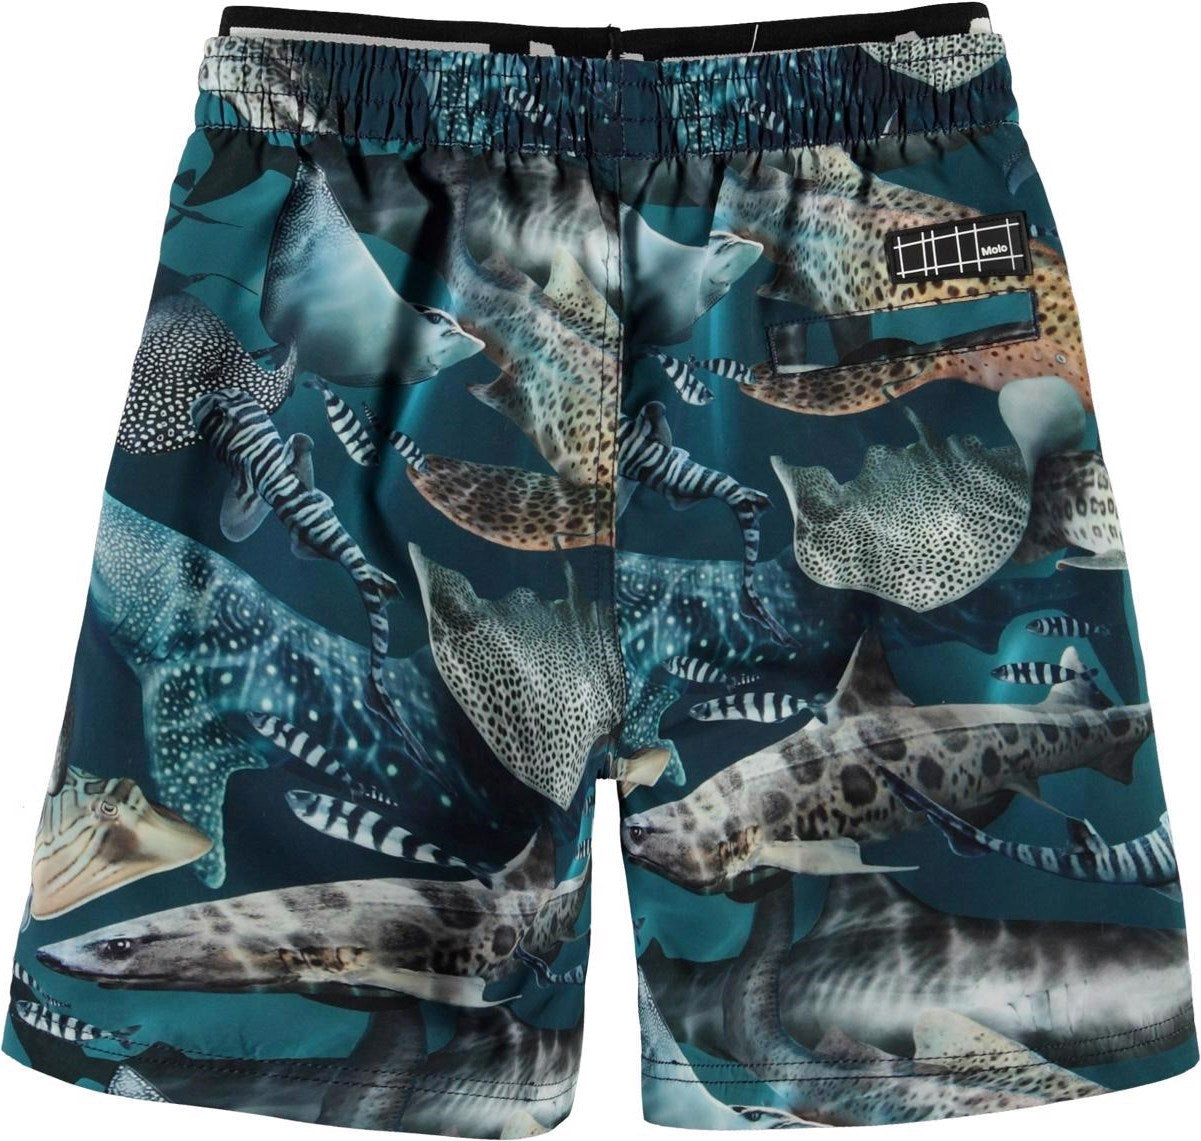 Molo Neal Amazing Sharks Board Shorts